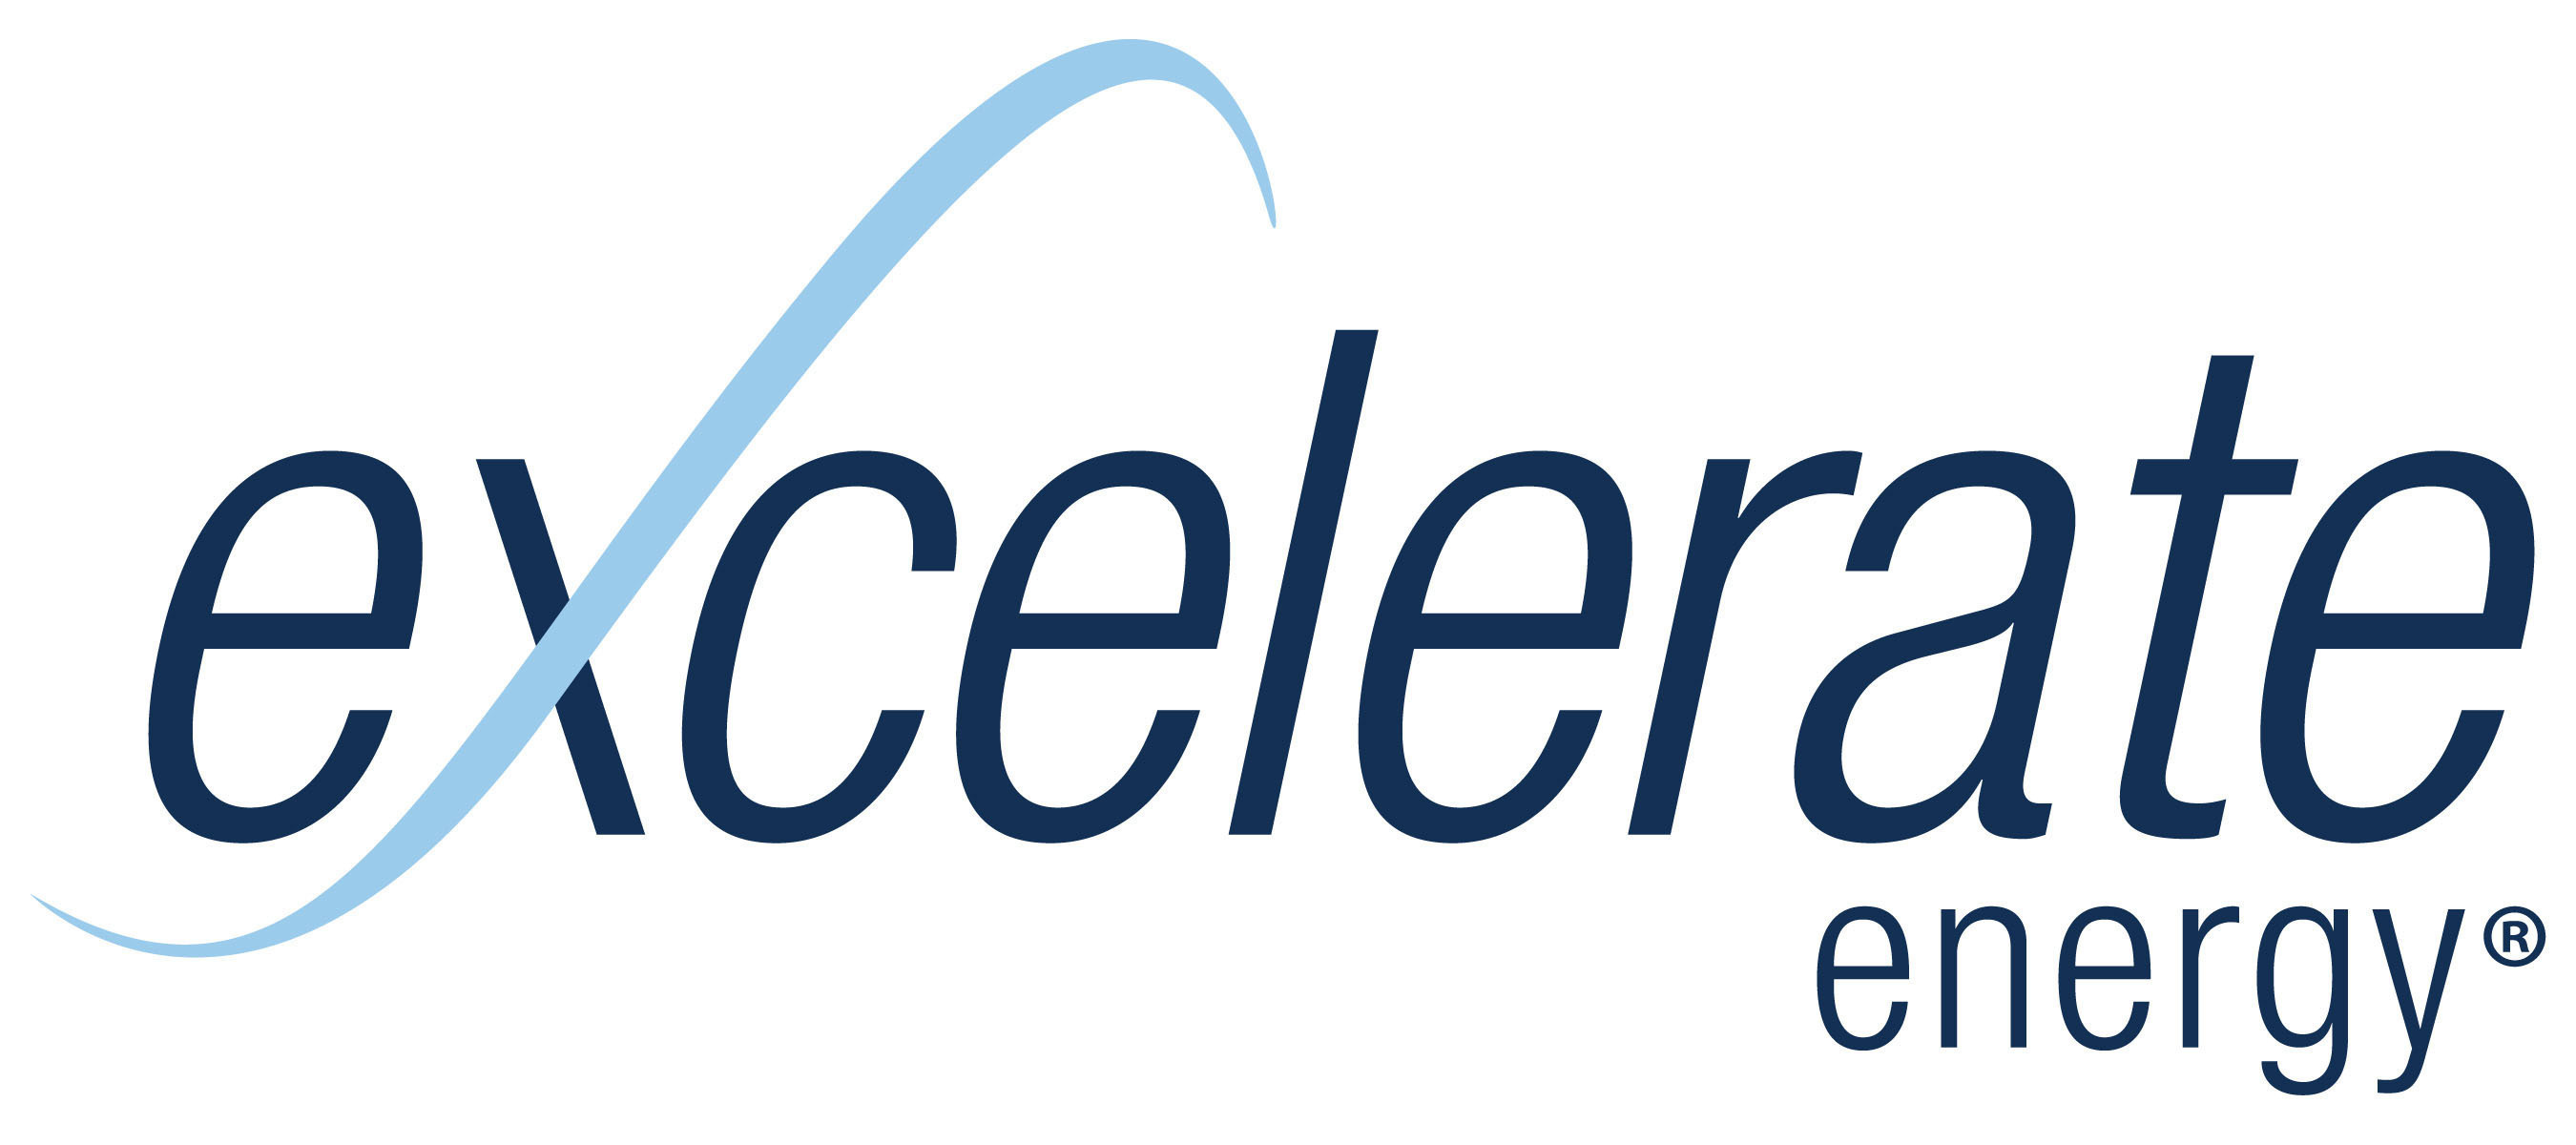 Excelerate Energy Logo. (PRNewsFoto/Excelerate Energy, L.P.) (PRNewsFoto/)